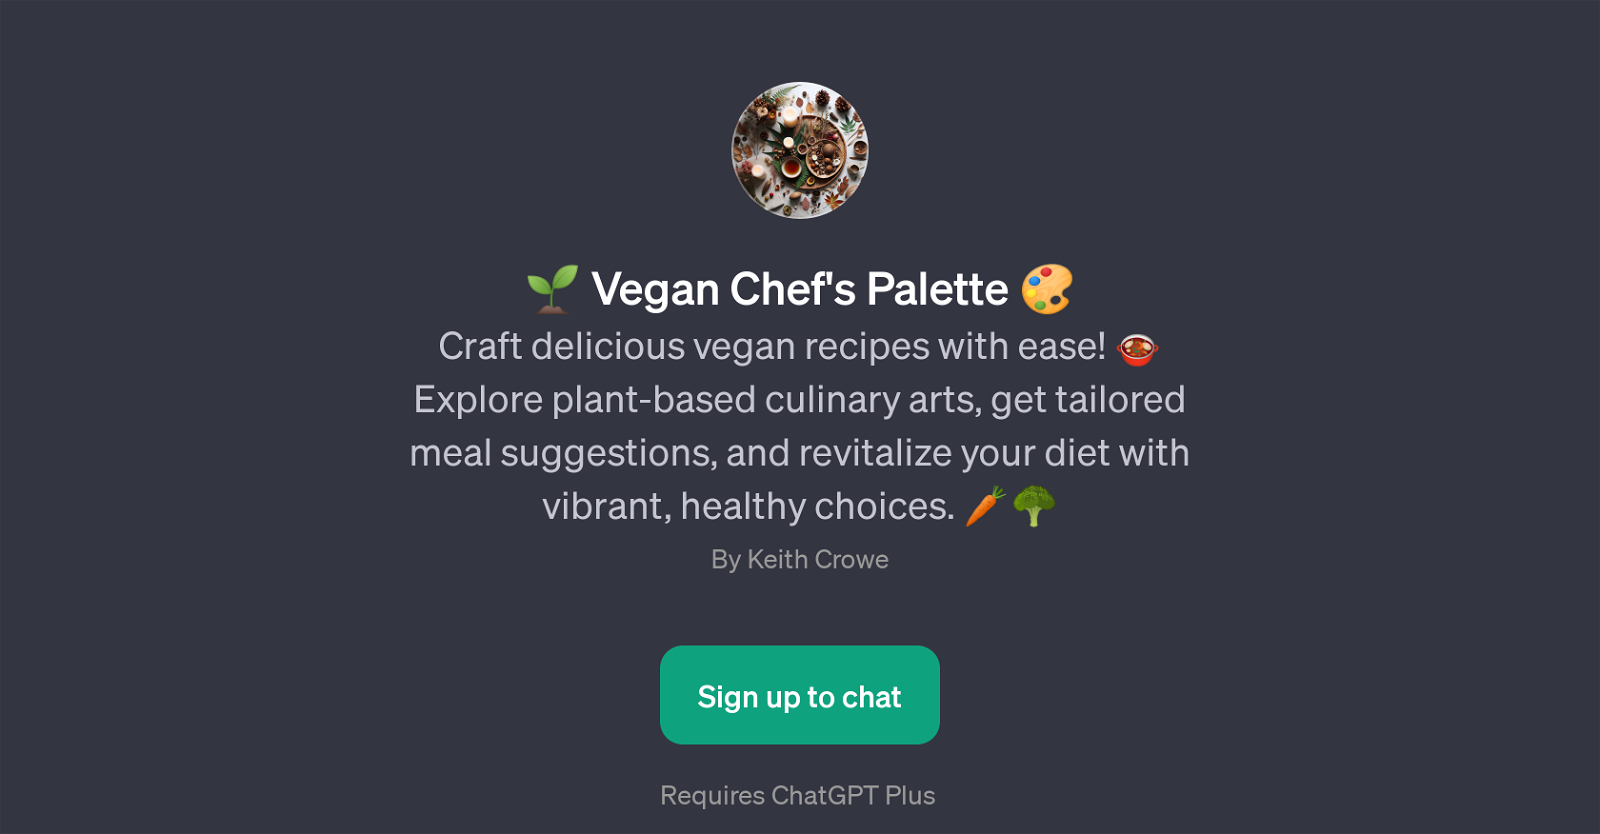 Vegan Chef's Palette website